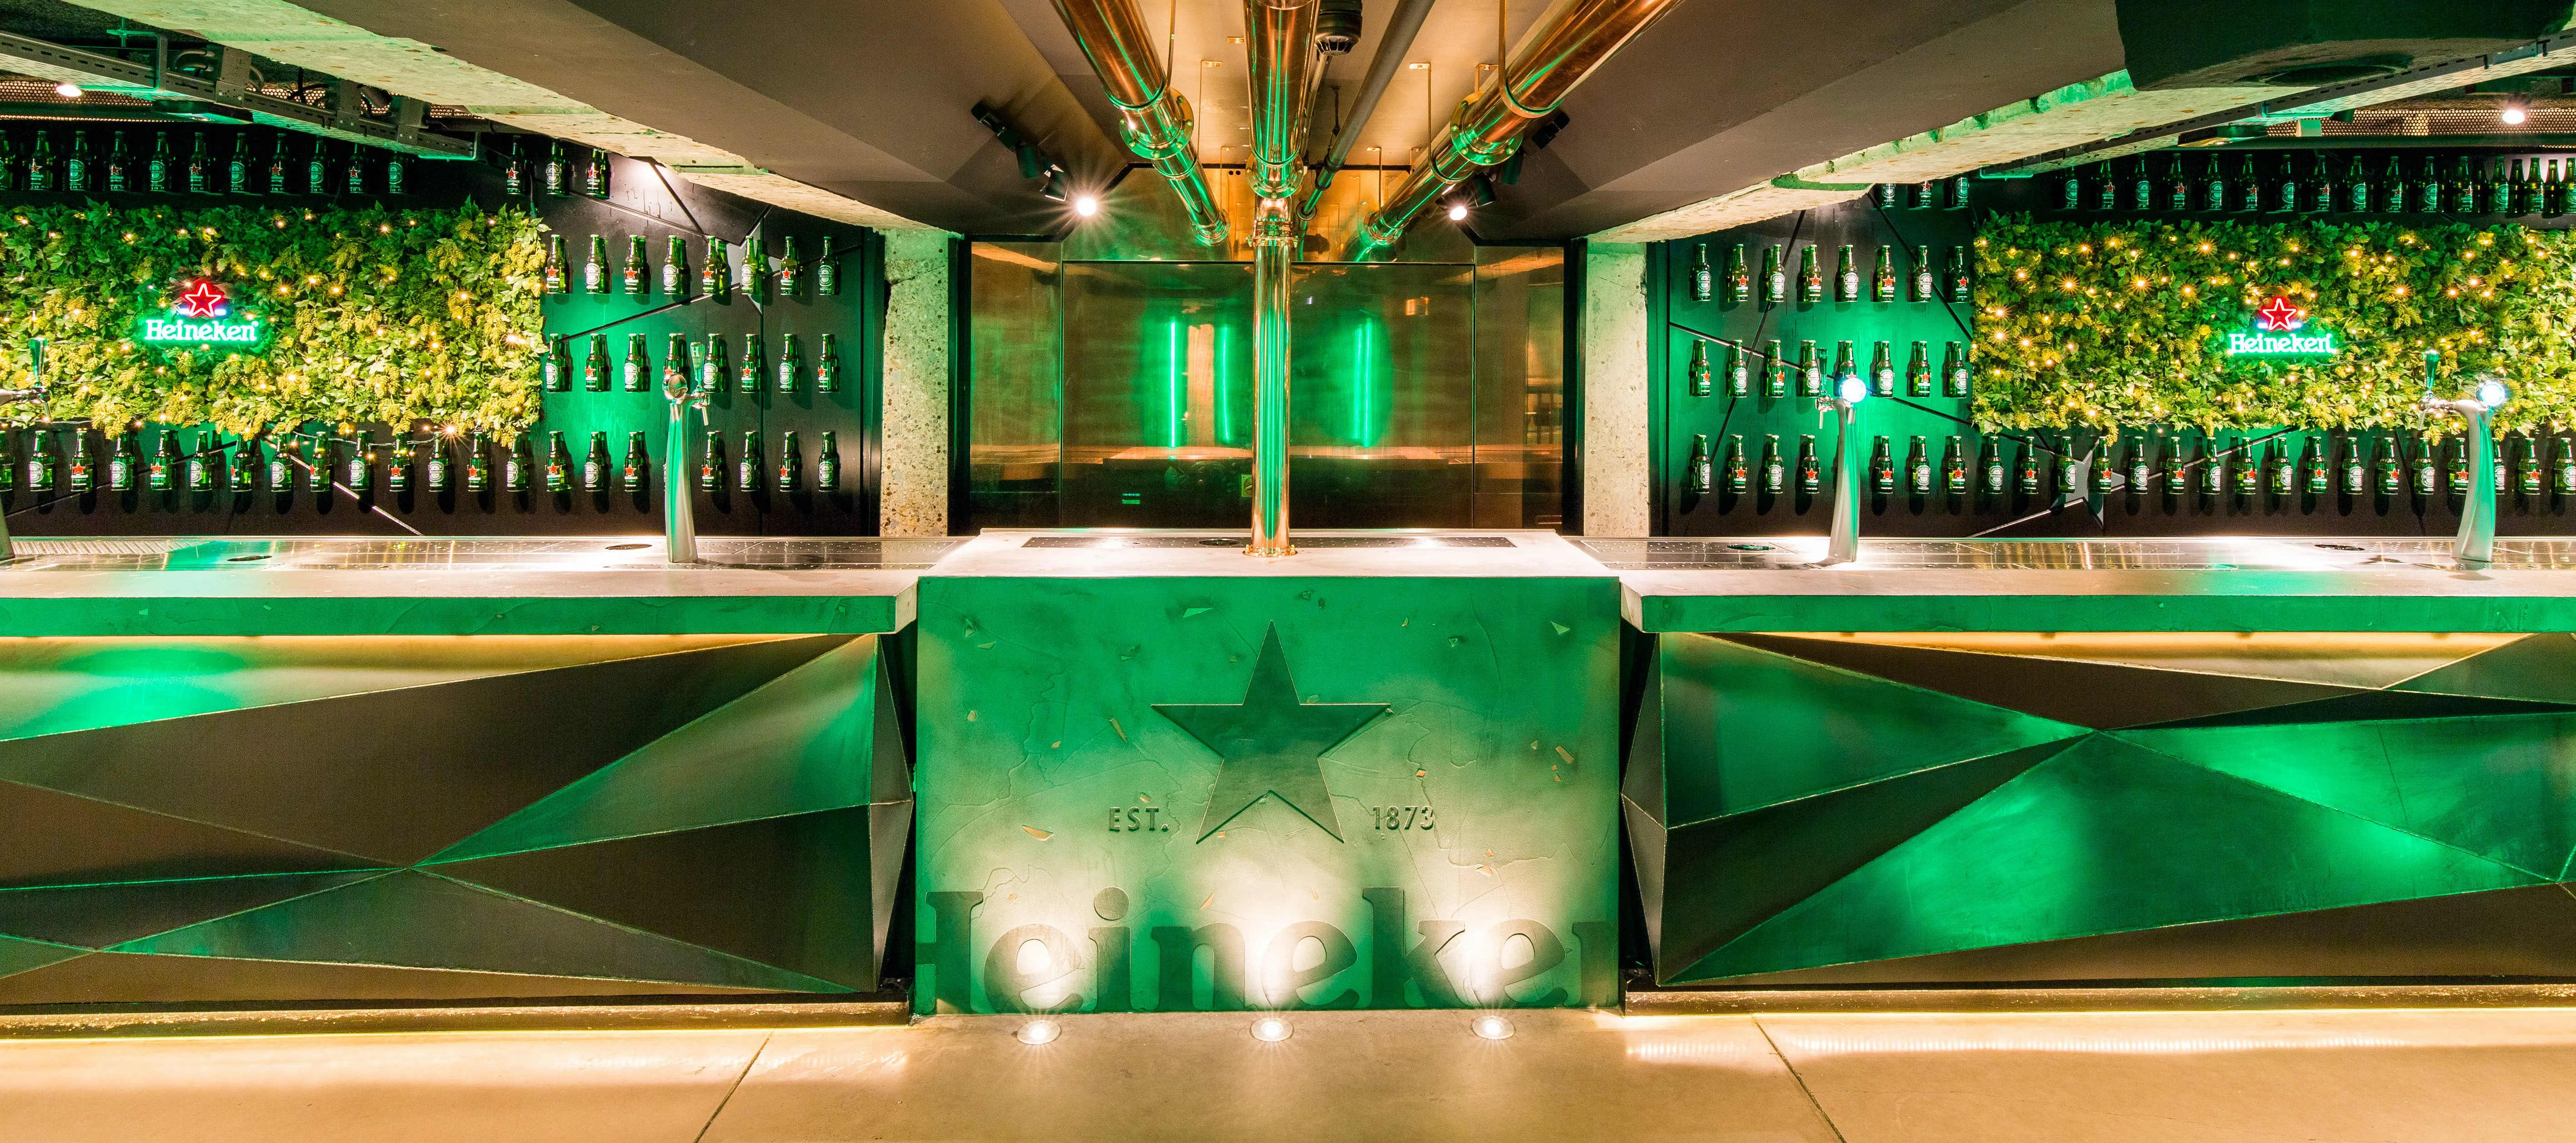 Heineken Experience in Netherlands, europe | Souvenirs,Beer - Country Helper